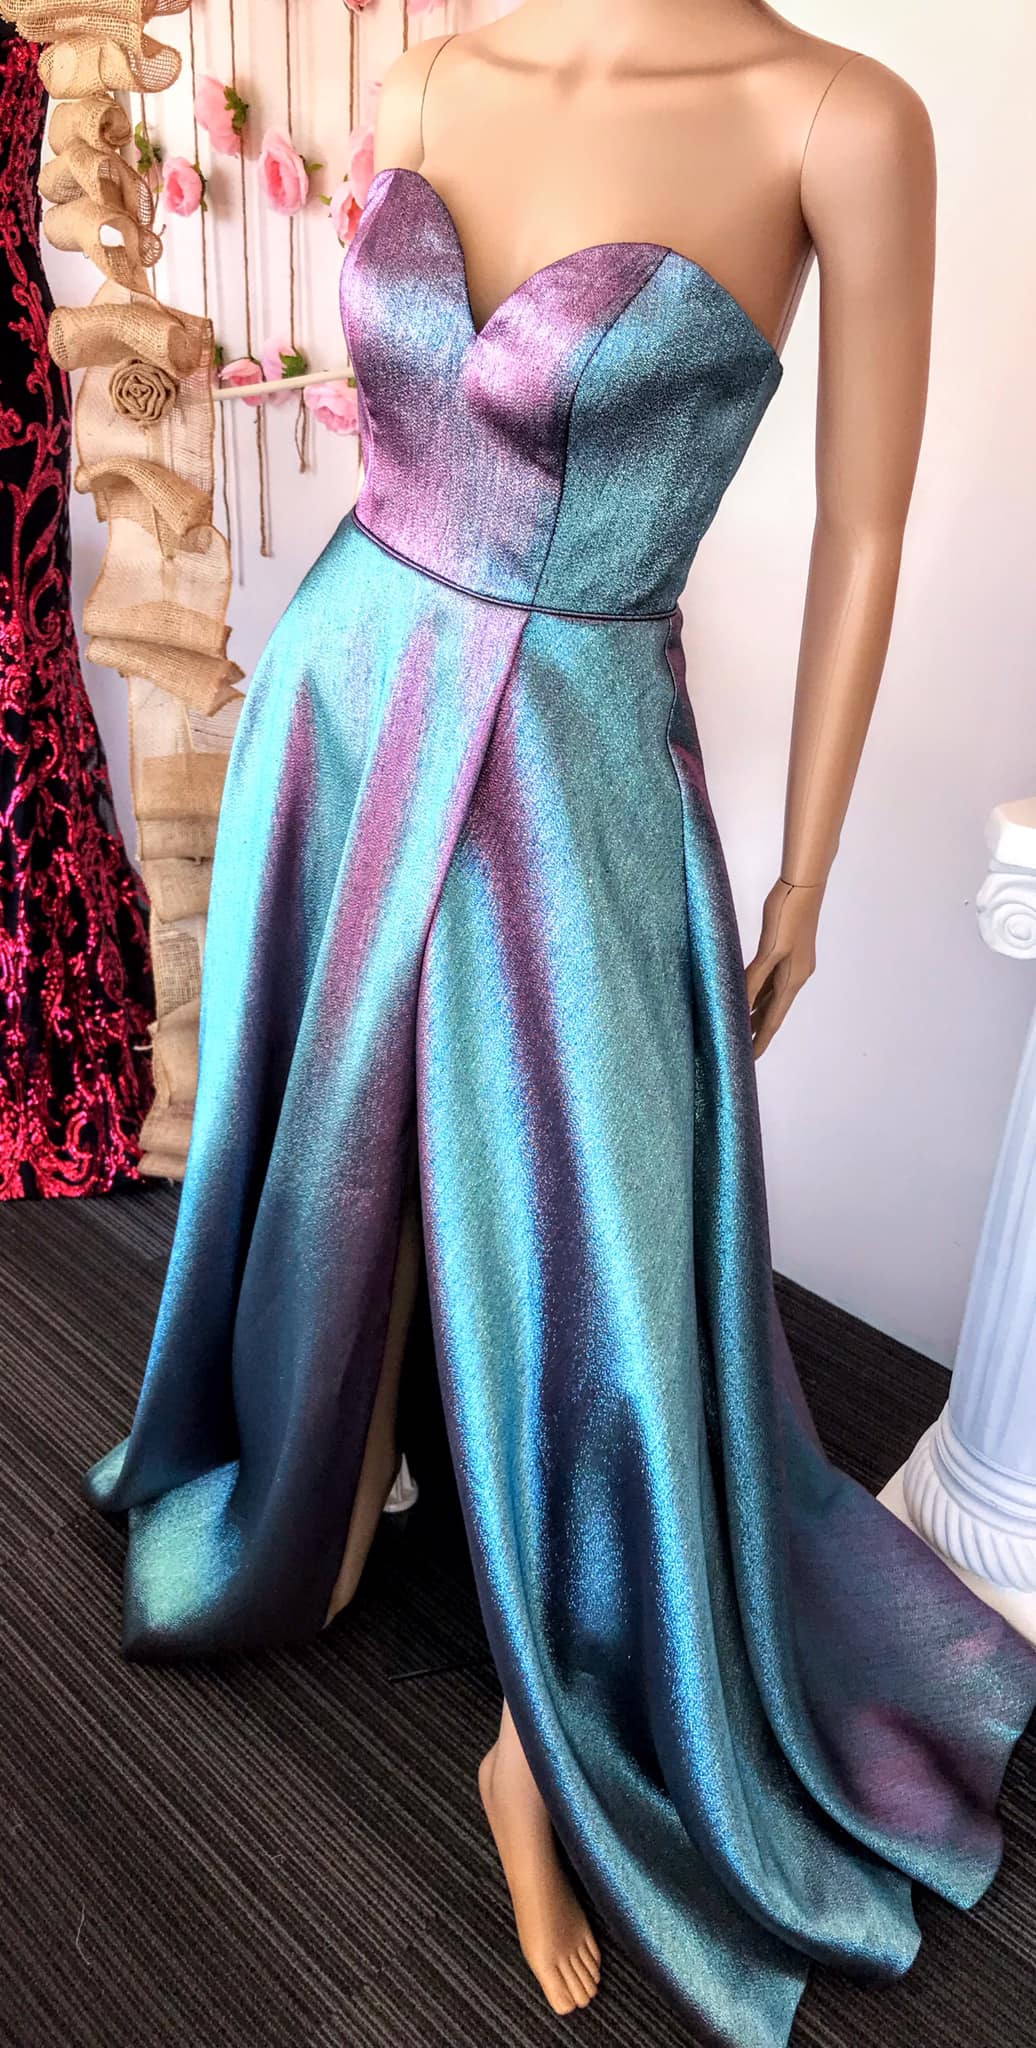 Pastel Colored Ball Gowns - Darius Cordell Fashion Ltd